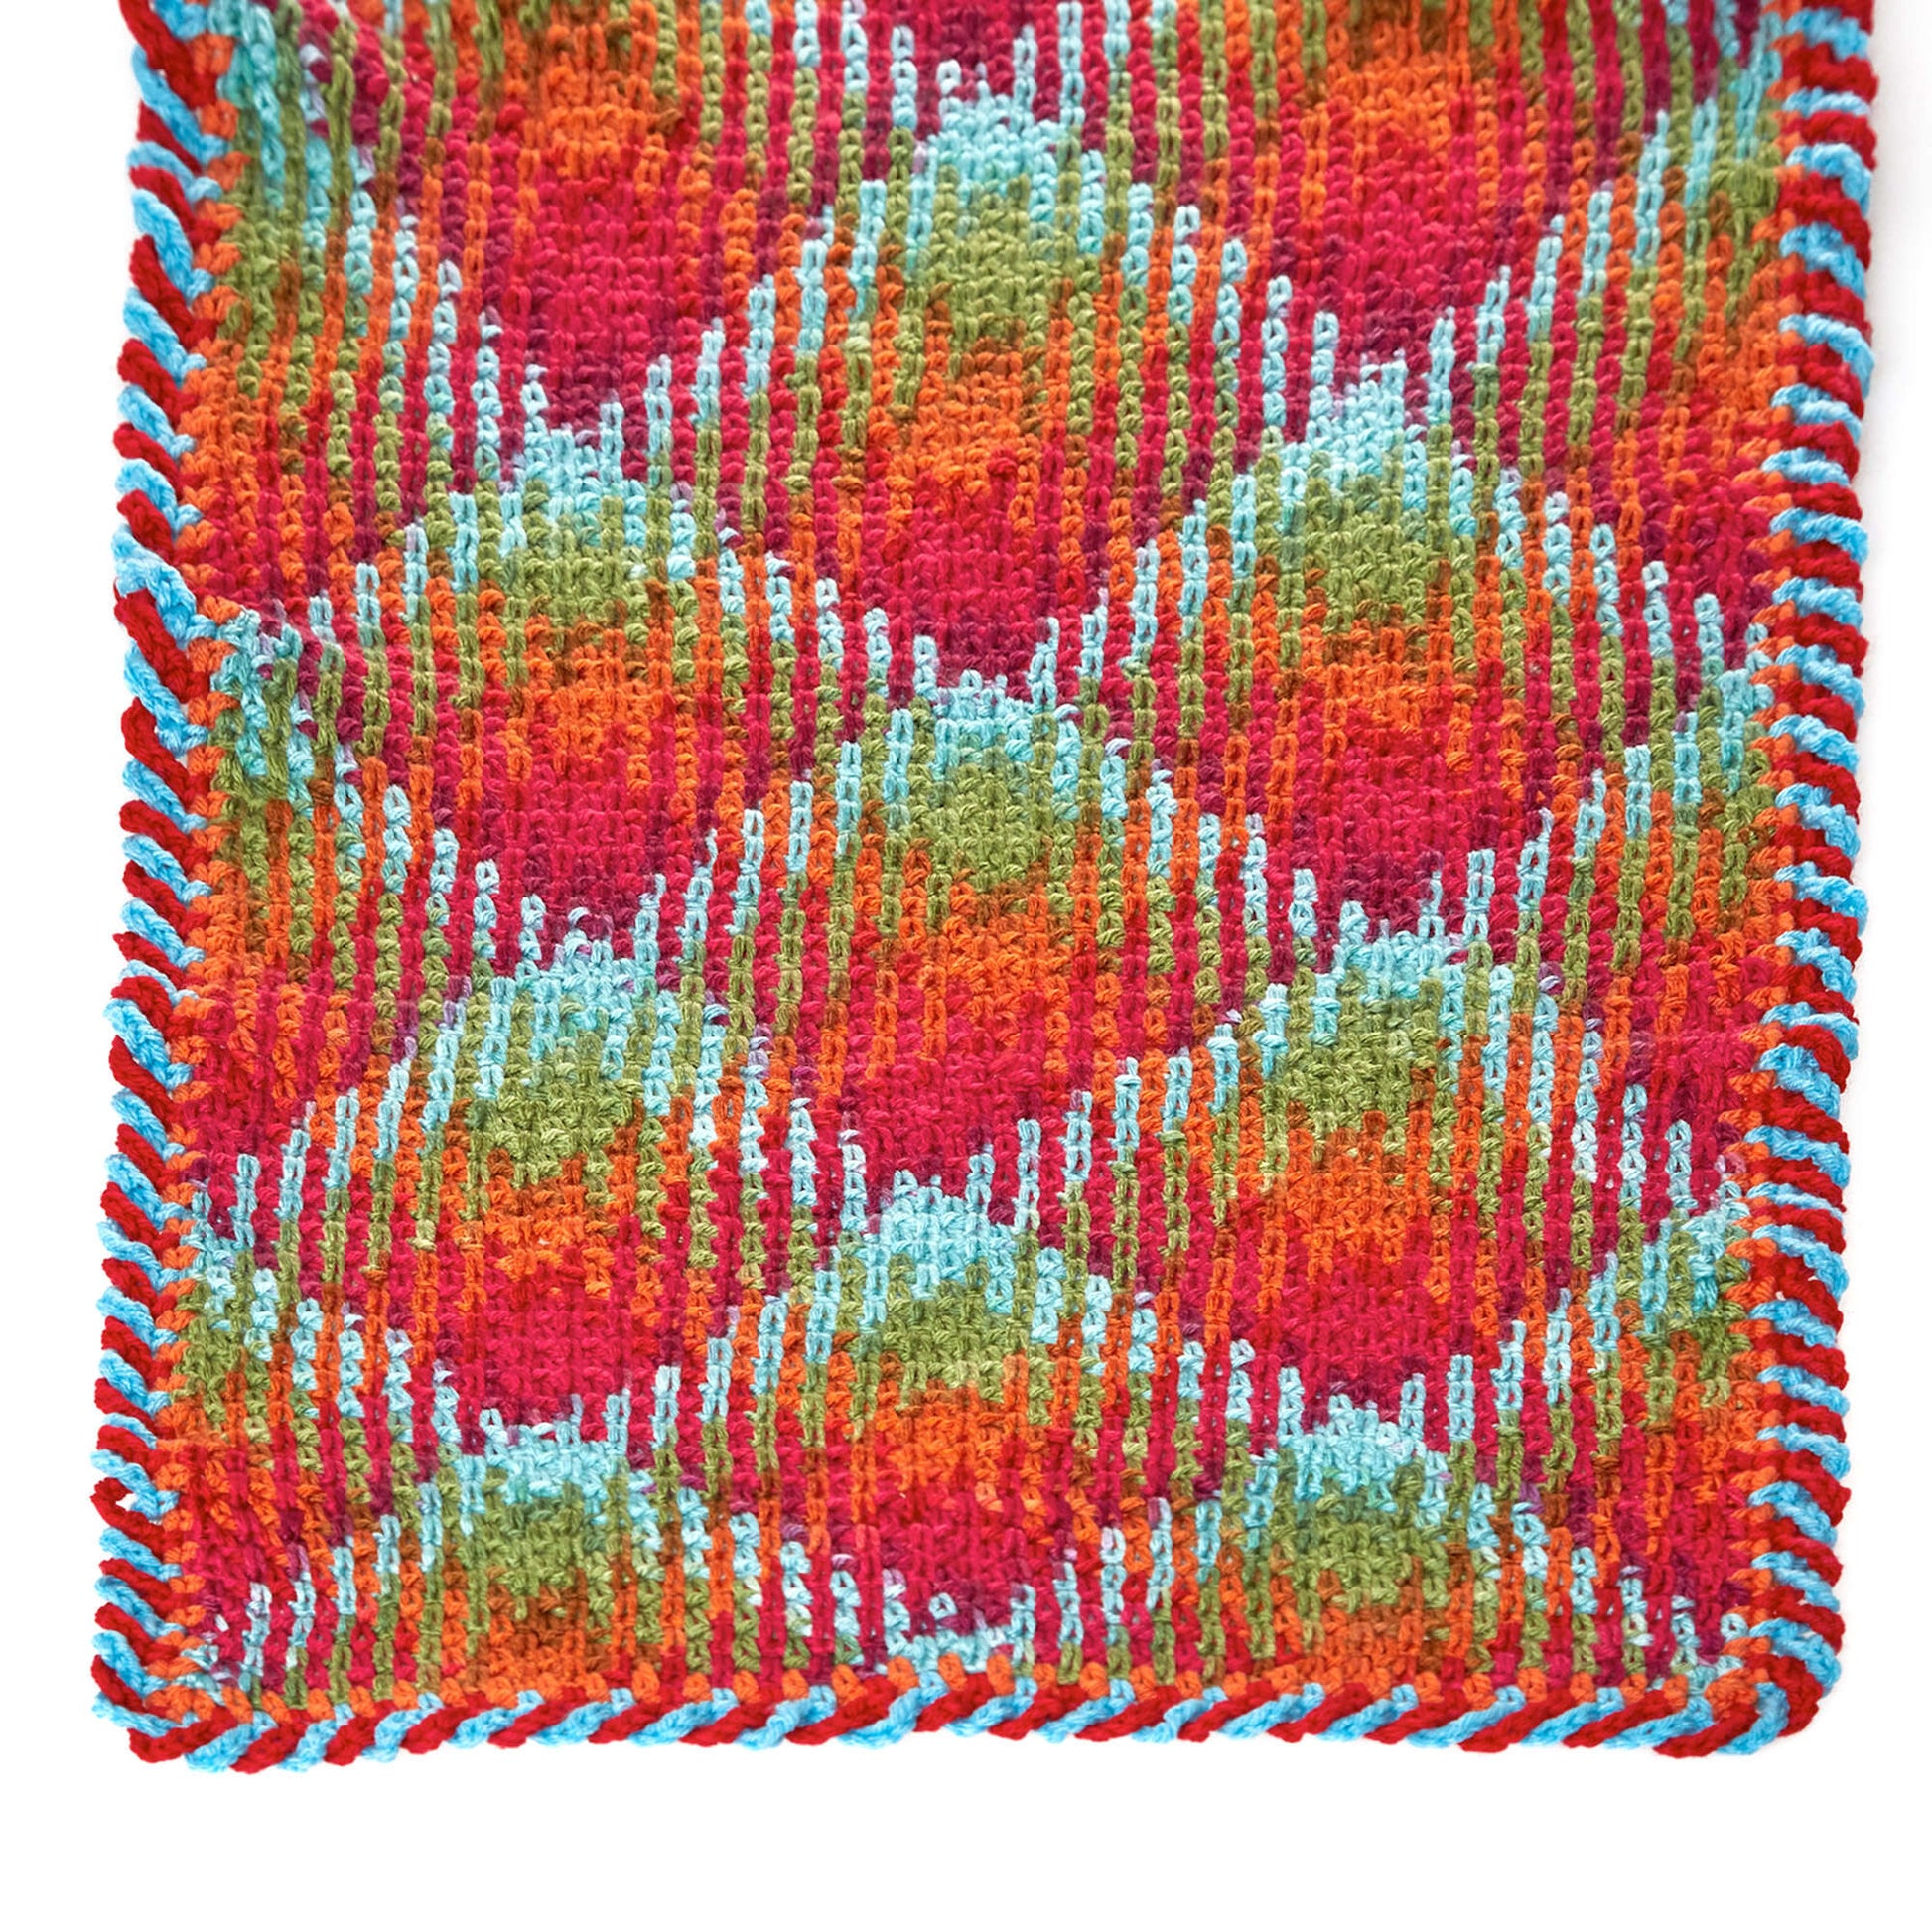 Free Red Heart Crochet Planned Pooling Argyle Table Runner Pattern